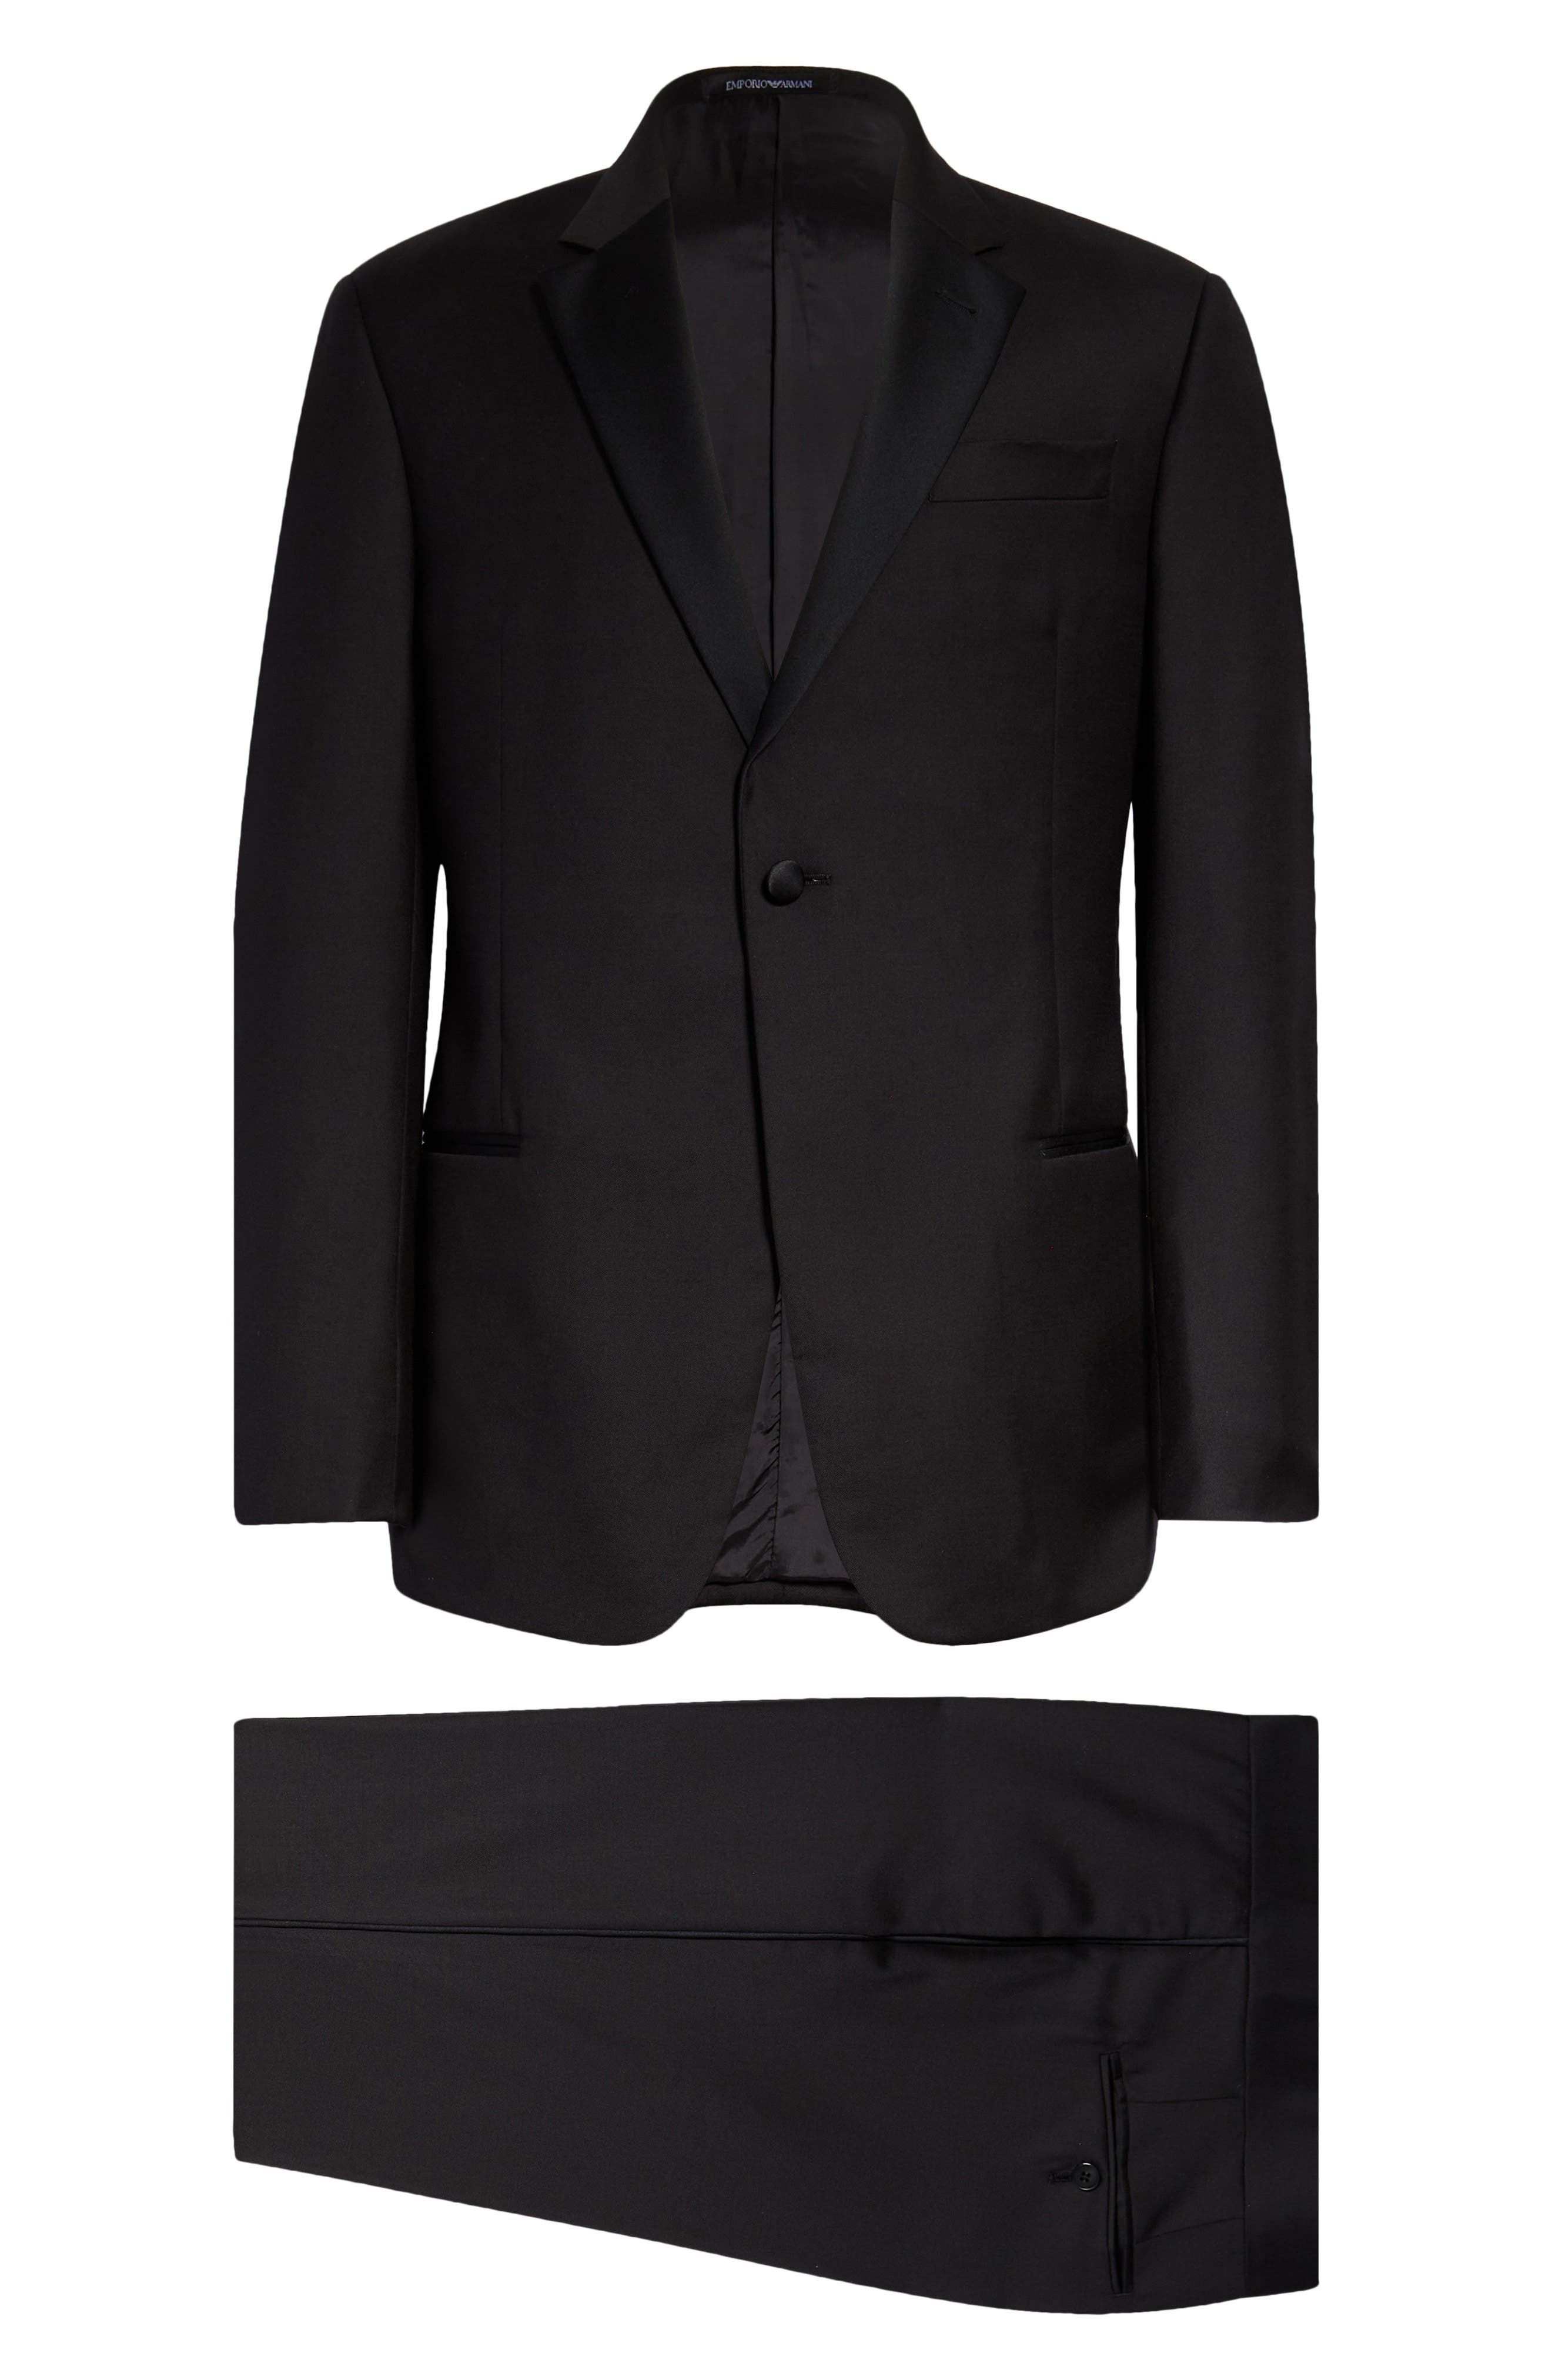 Men's Premium Quality Fancy Stripe Modern Fit Dress Suits All Black New 44R 